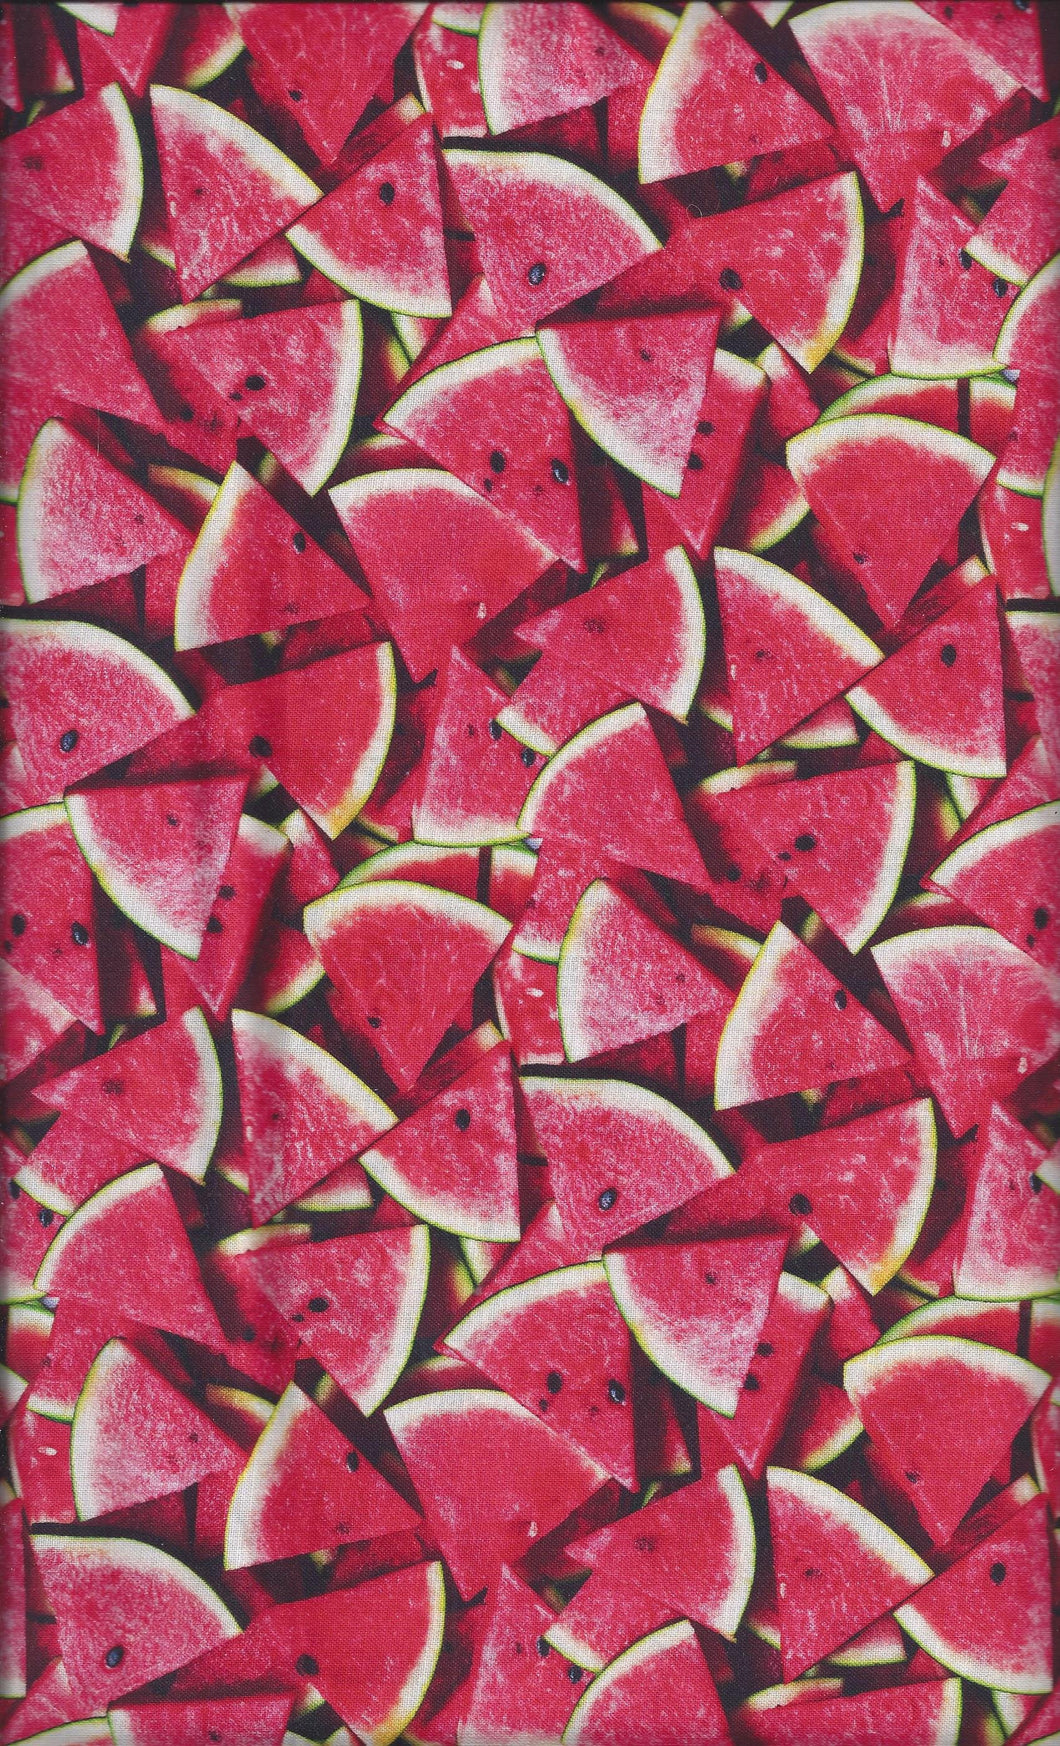 Watermelon Slices ed539